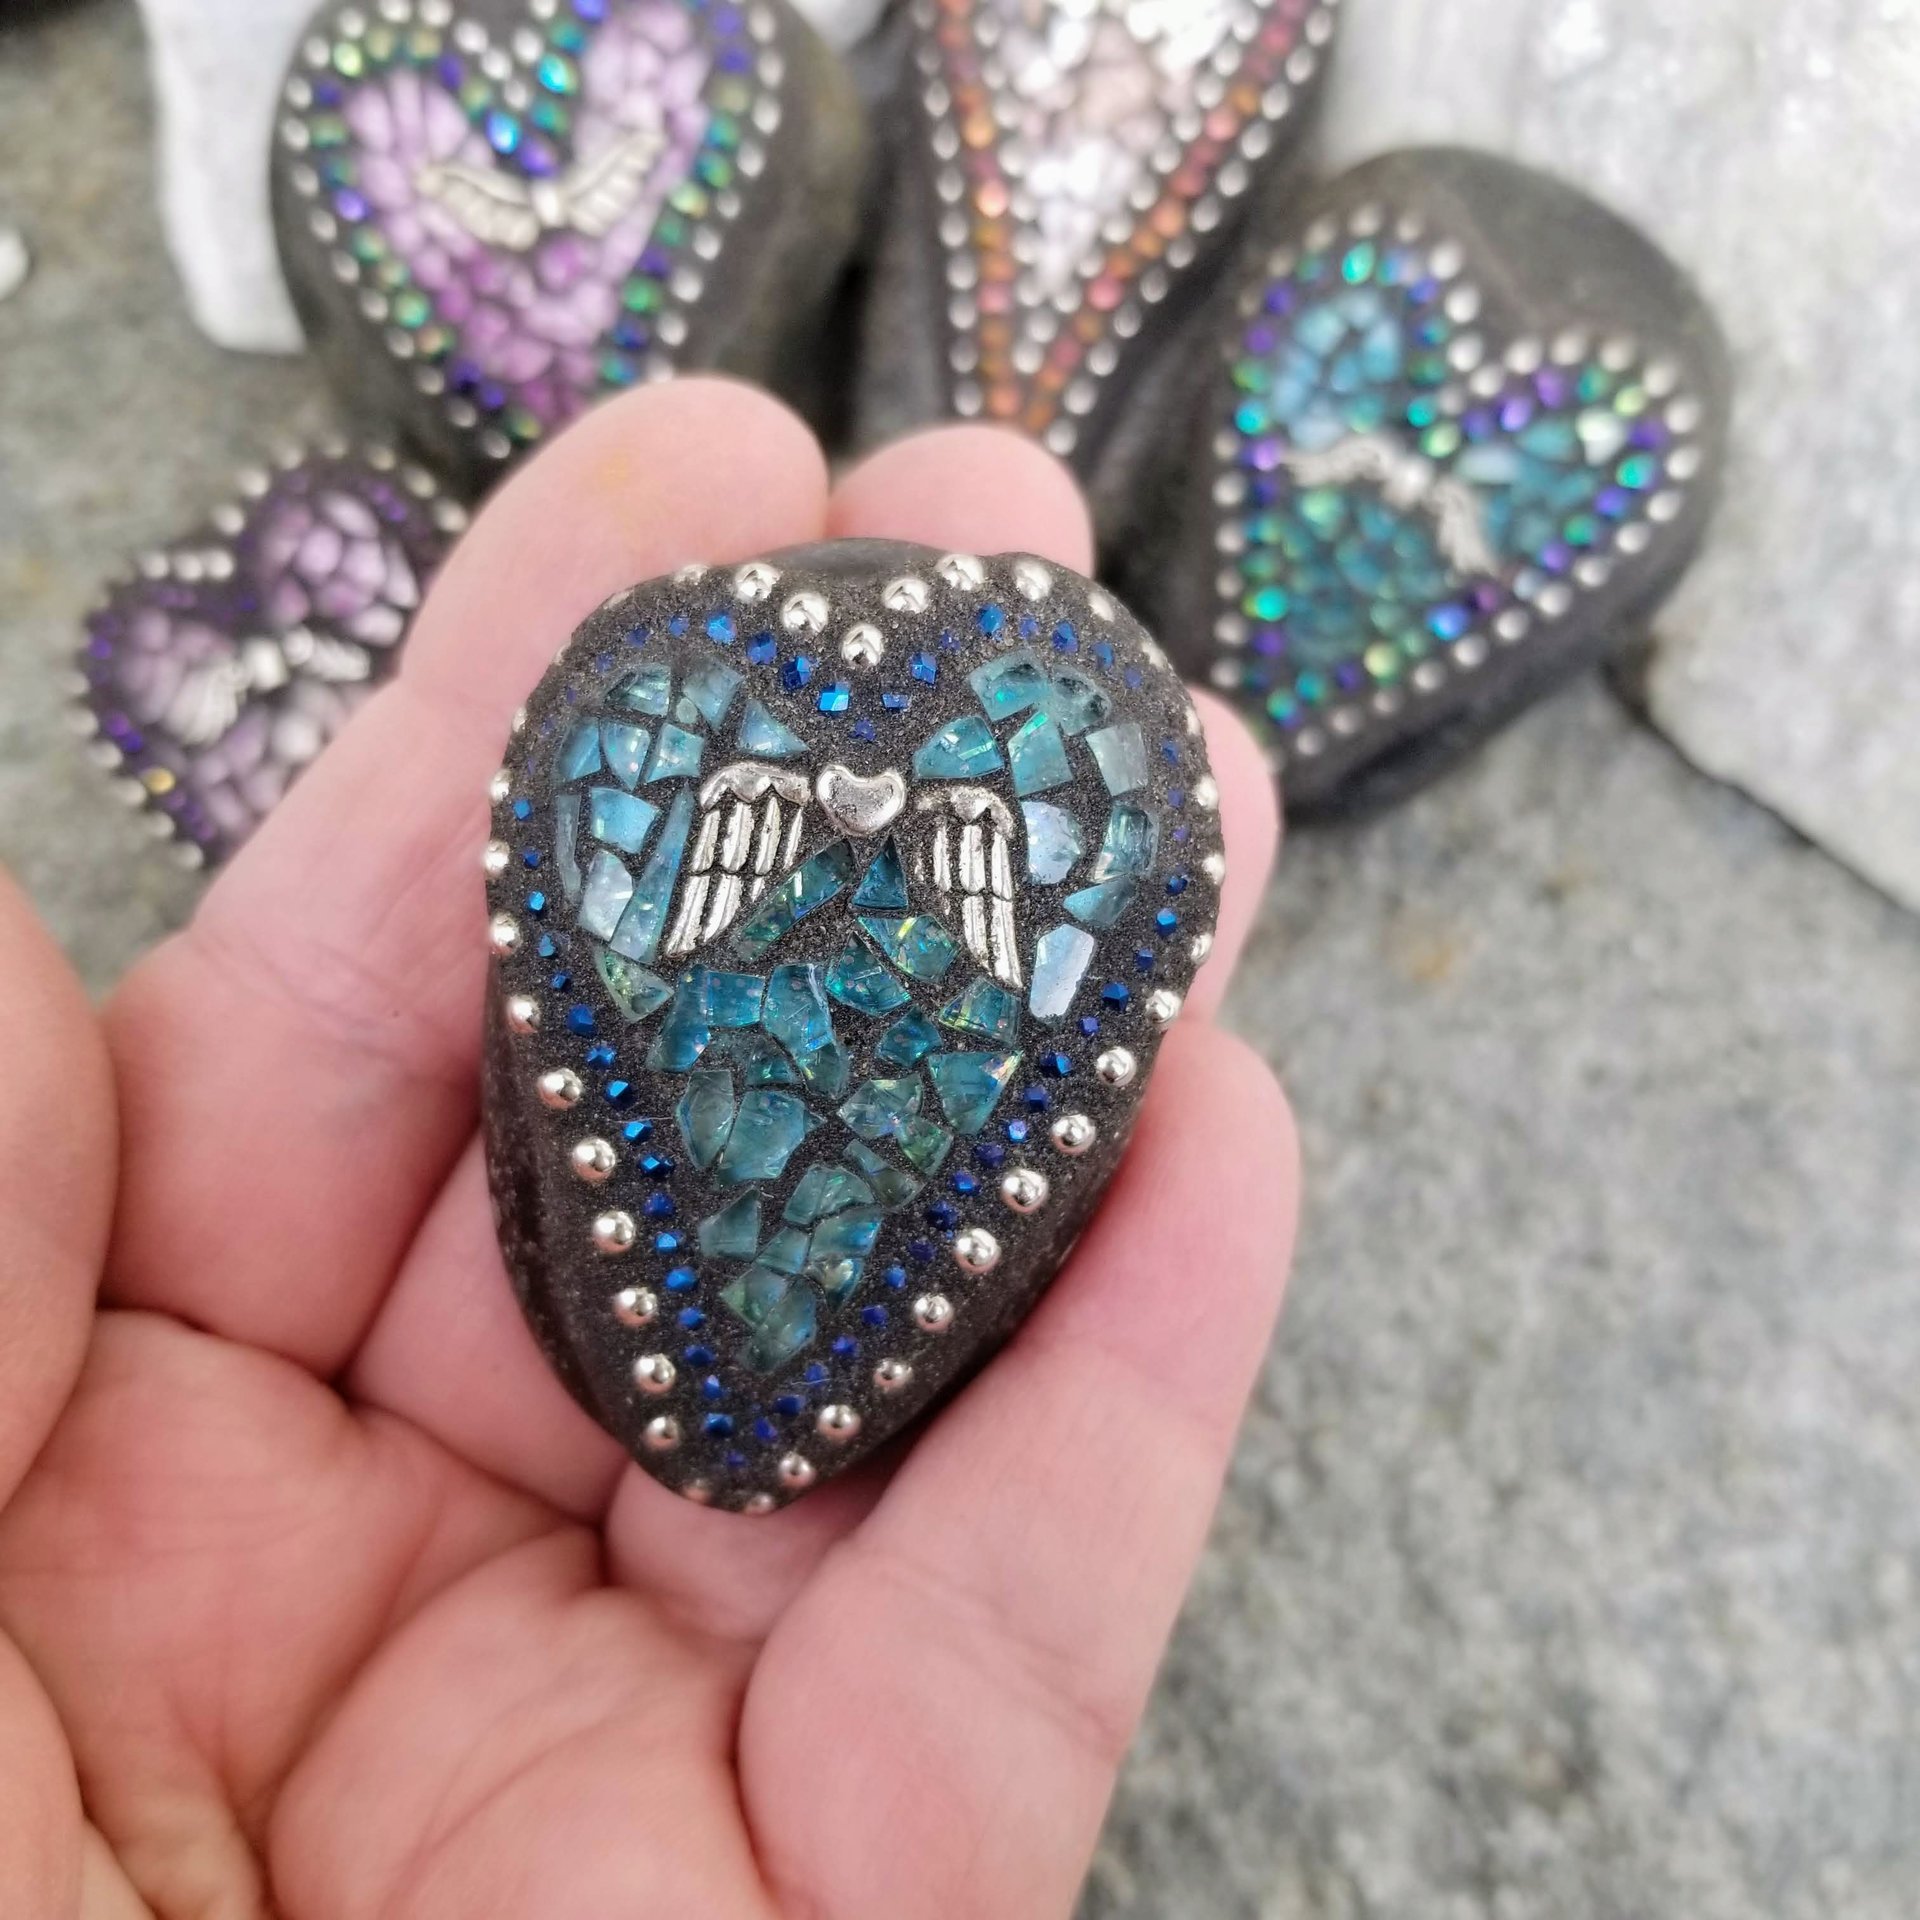 Angel Wing Mosaic Garden Stone Set of 6  #11 Group Mosaic Hearts  